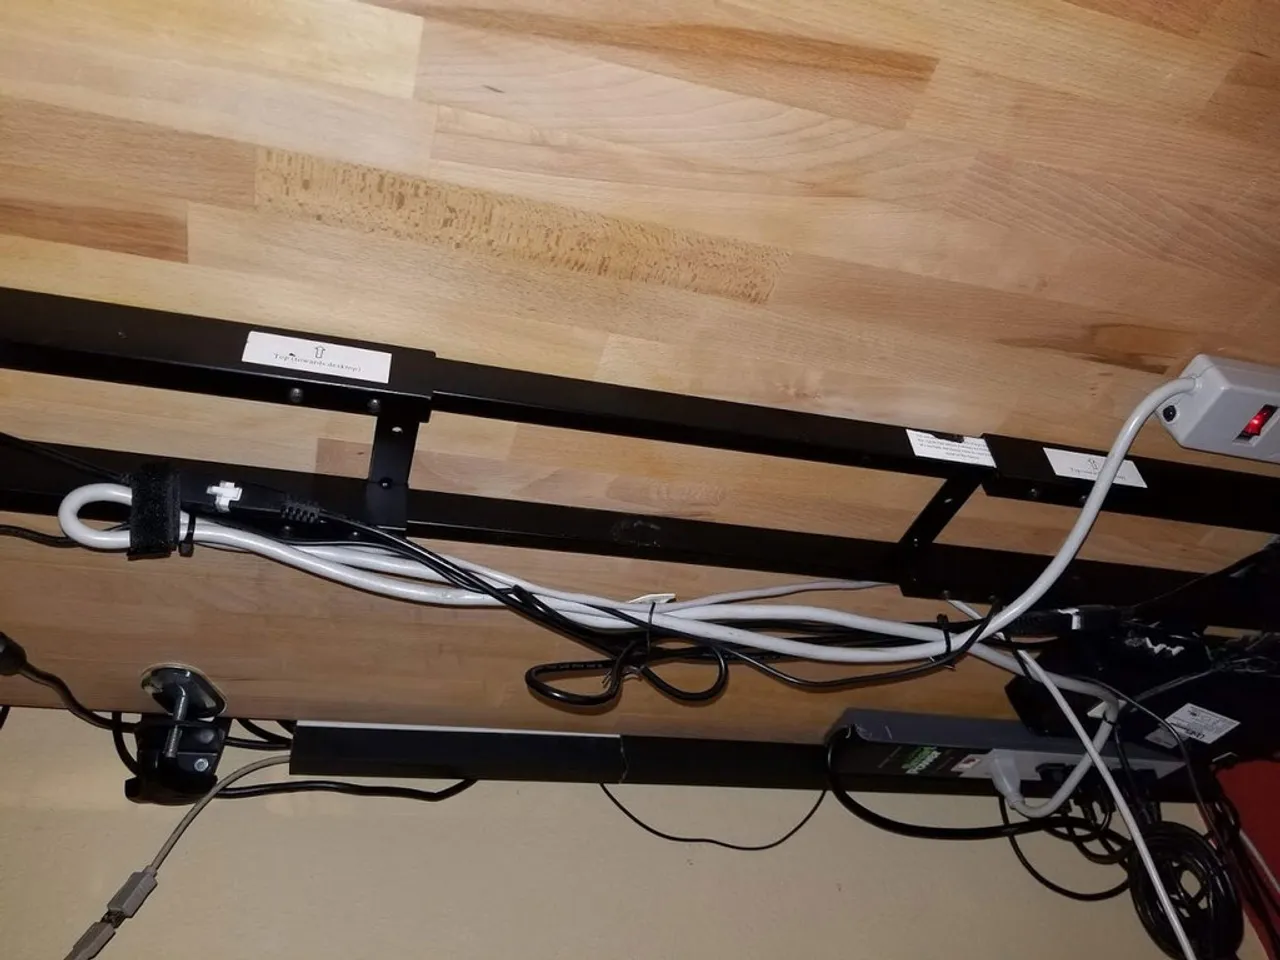 Cable Management Large for Desks